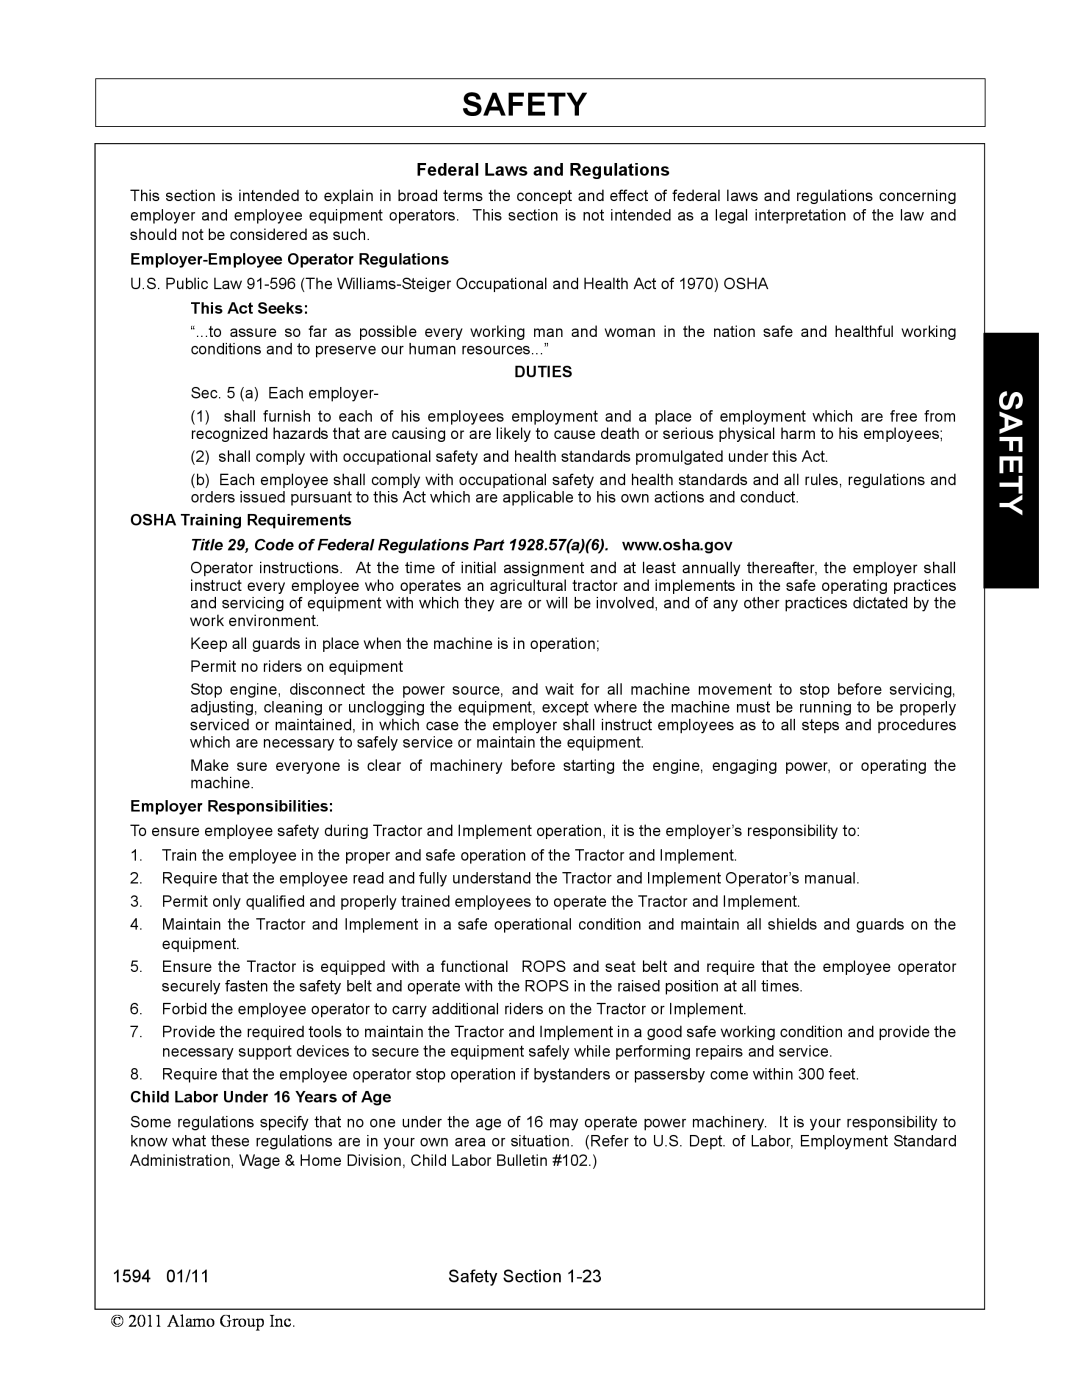 Rhino Mounts 1594 manual Safety, Employer-Employee Operator Regulations, This Act Seeks, Duties, OSHA Training Requirements 